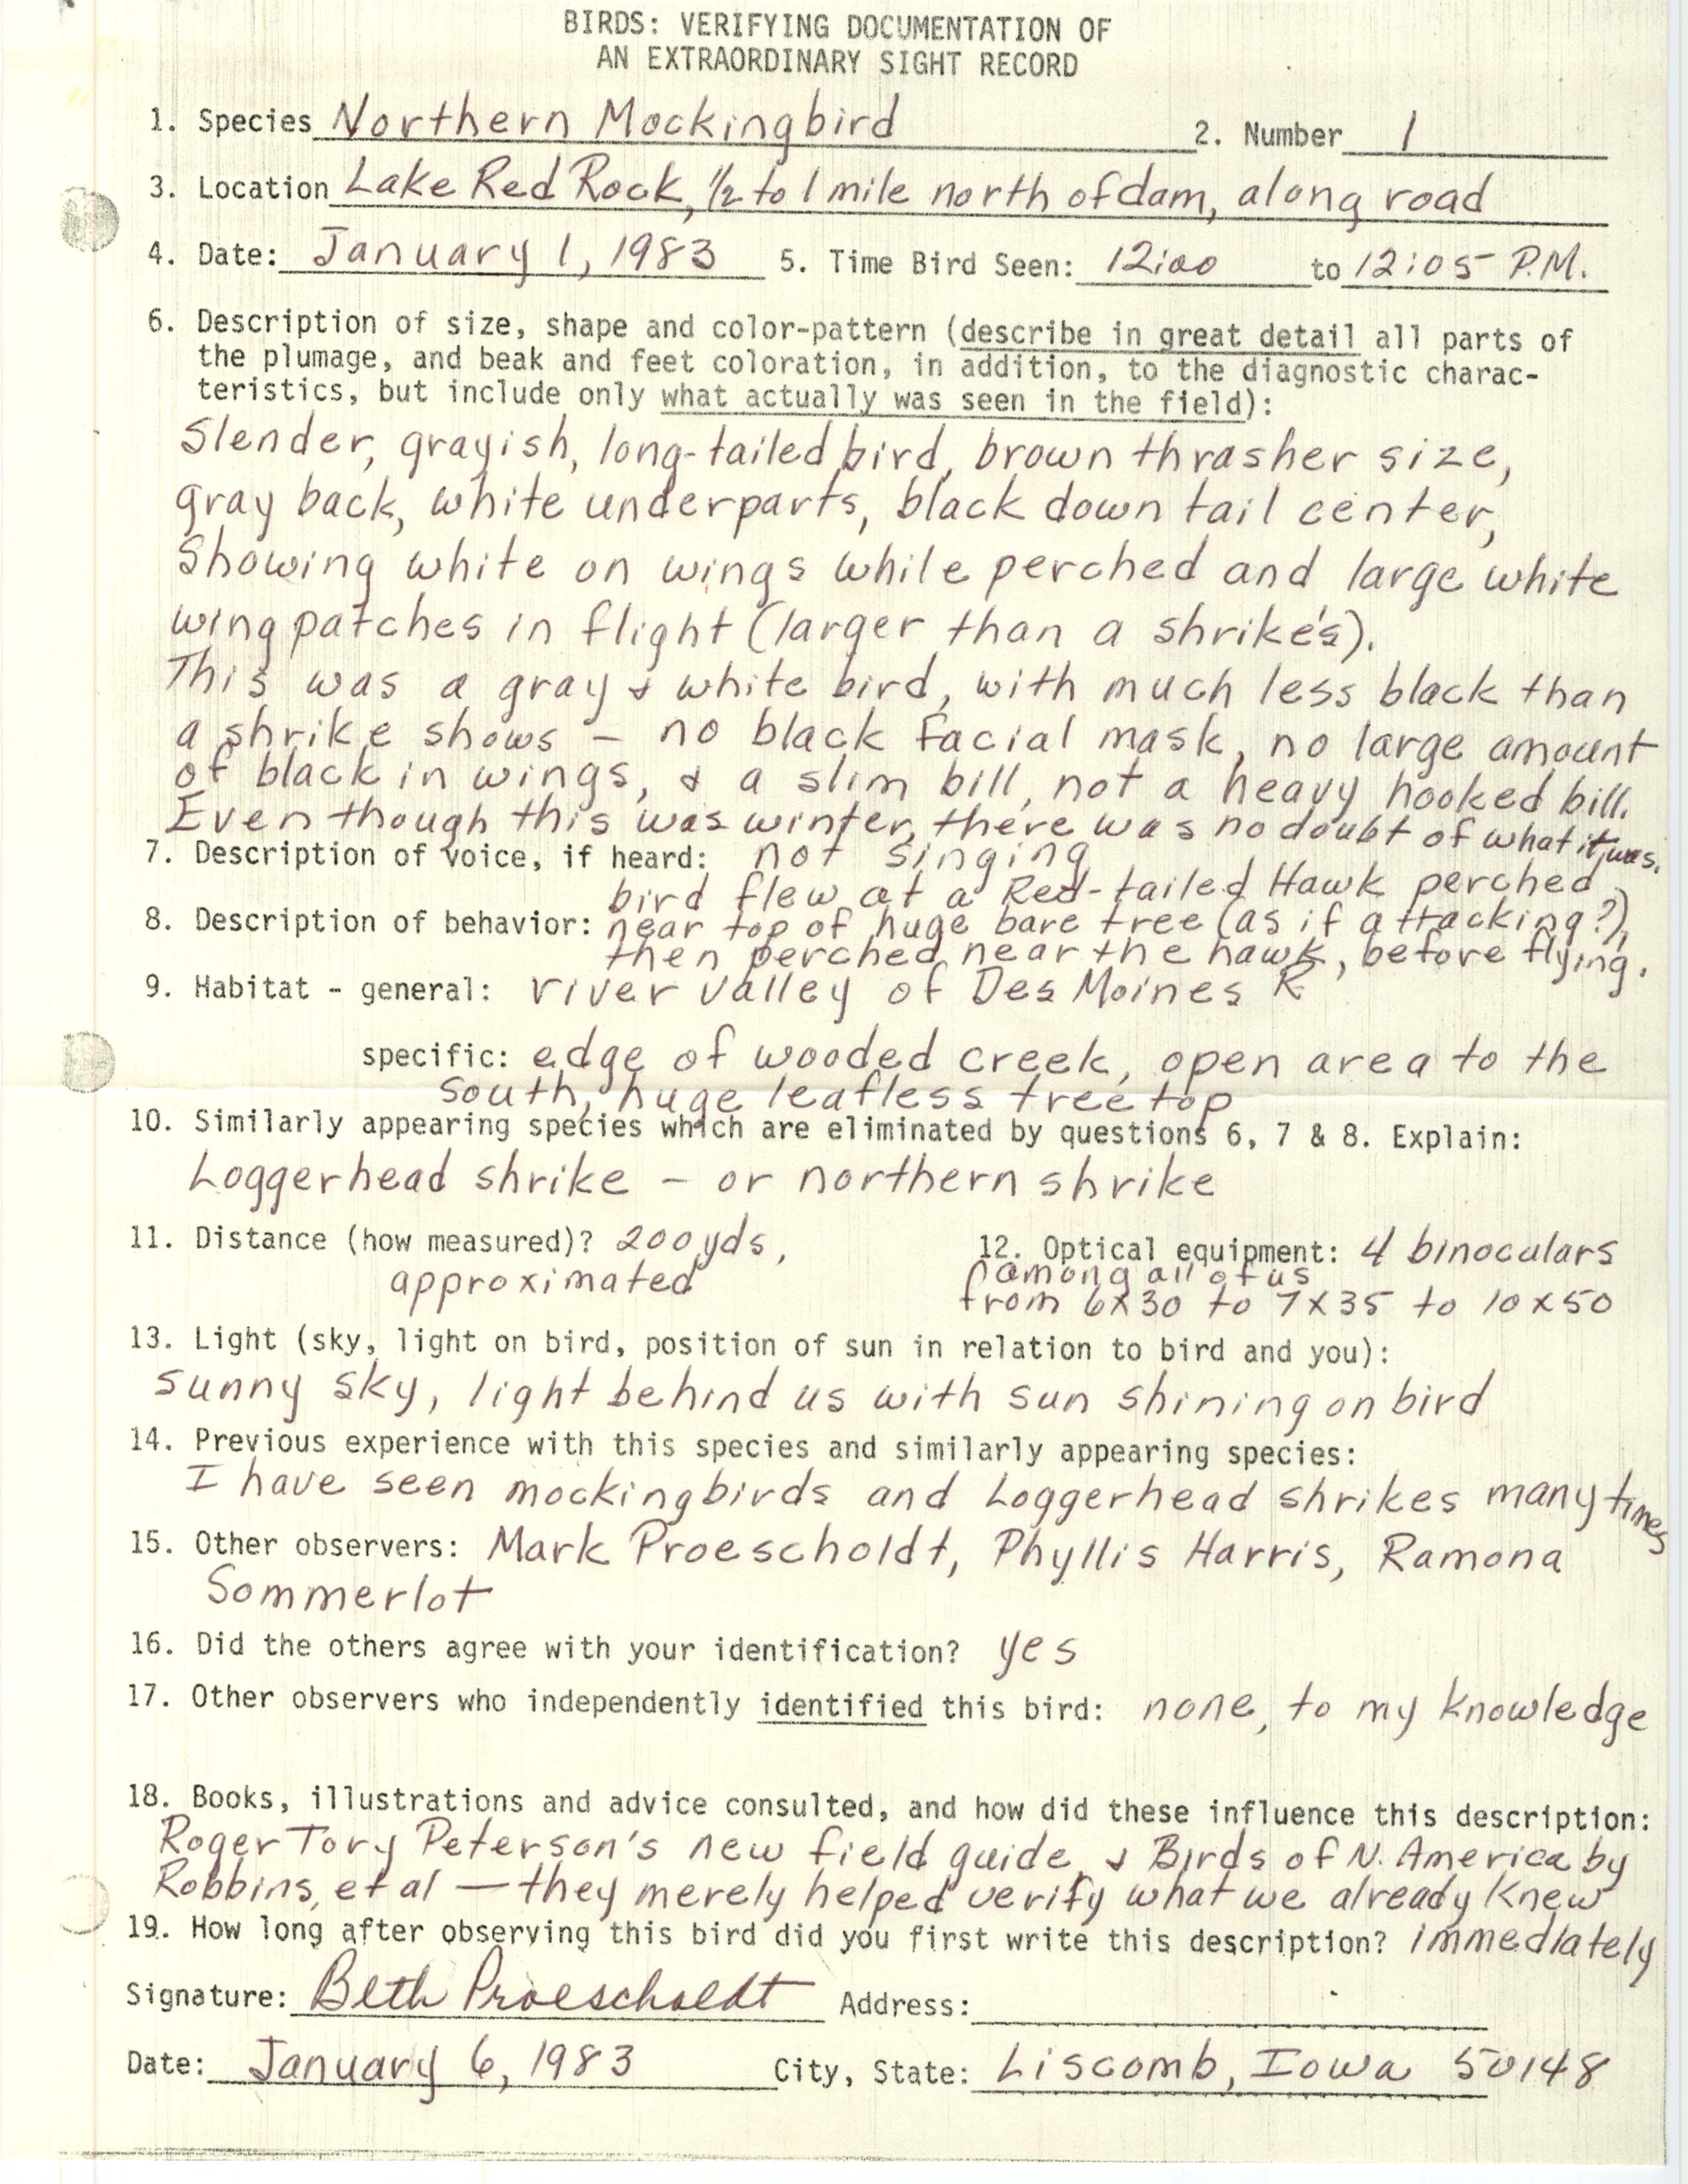 Rare bird documentation form for Northern Mockingbird at Lake Red Rock, 1983